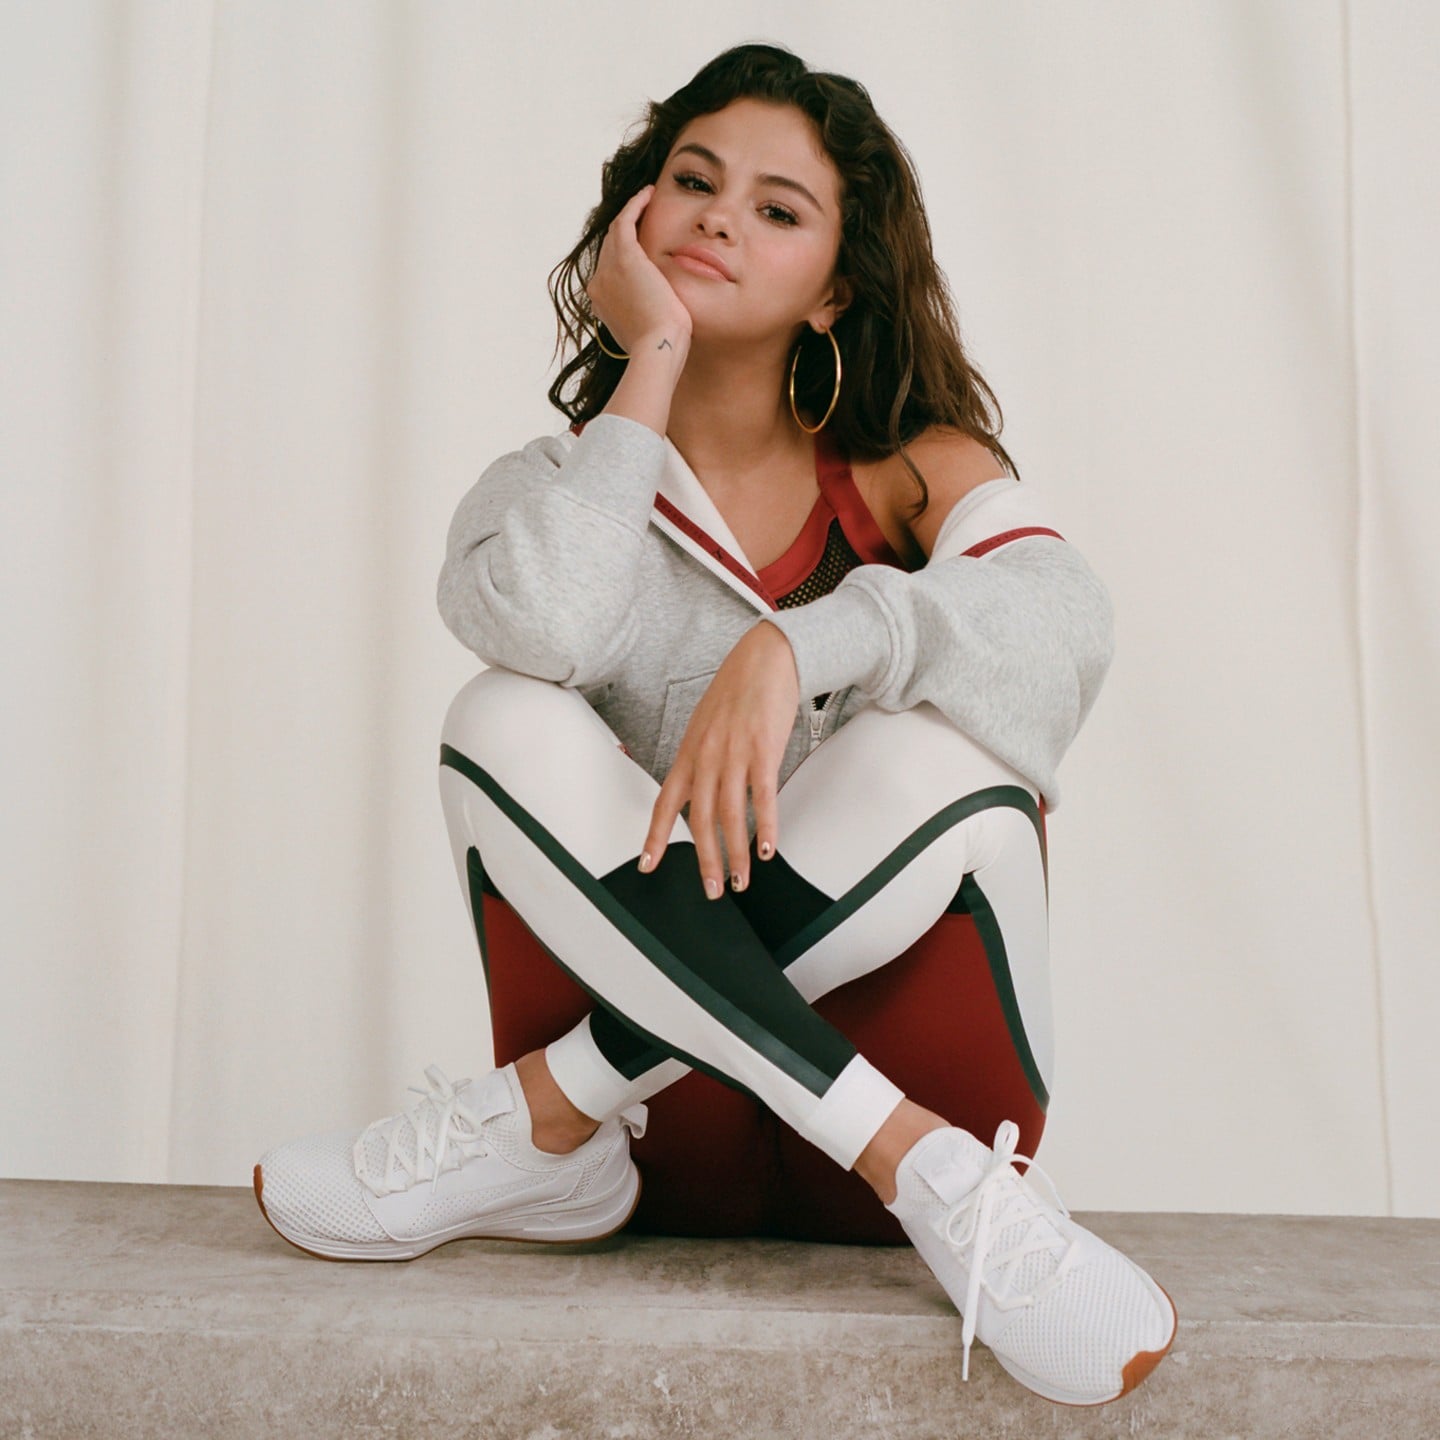 Selena Gomez Puma Collection 2018 